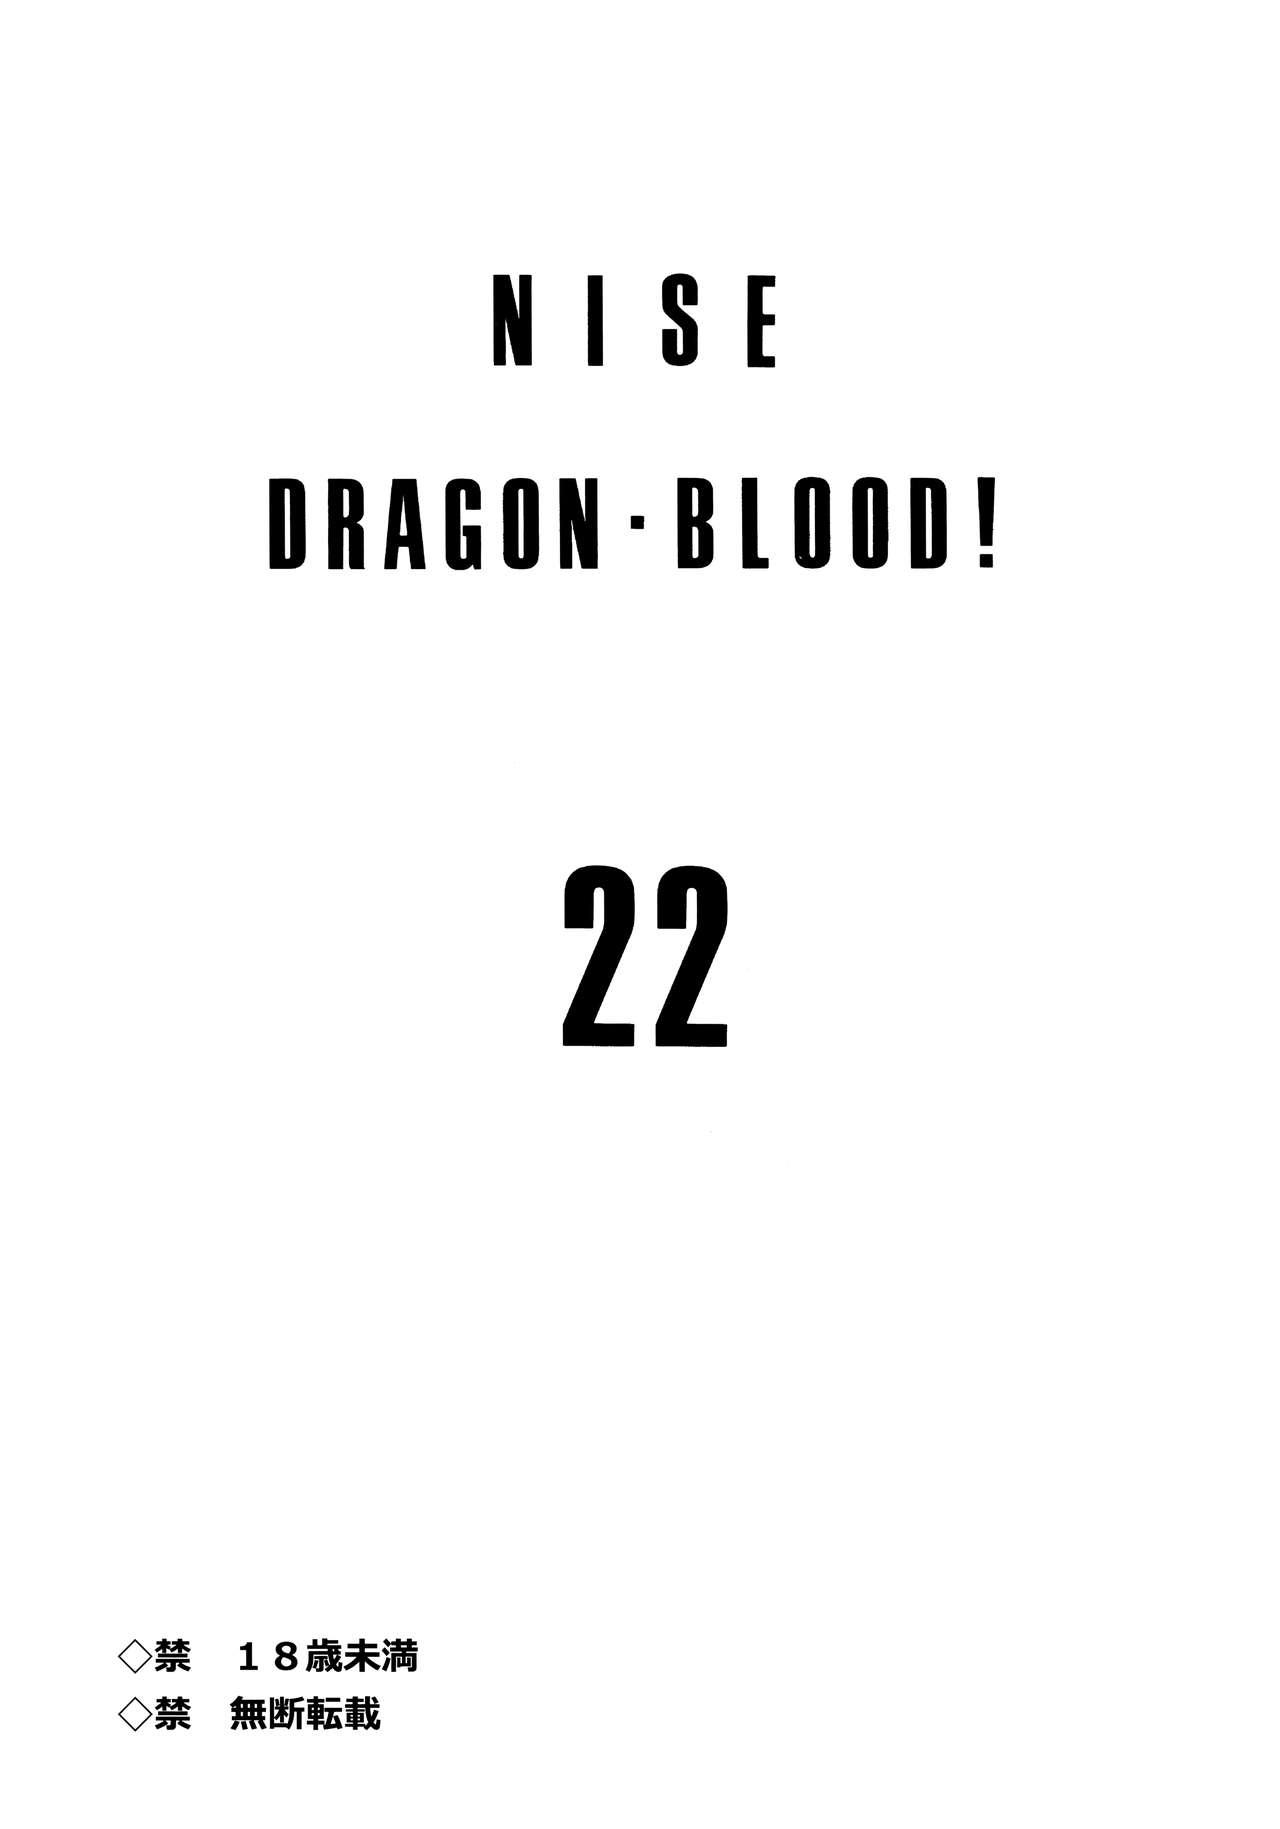 Nise Dragon Blood! 22. 1